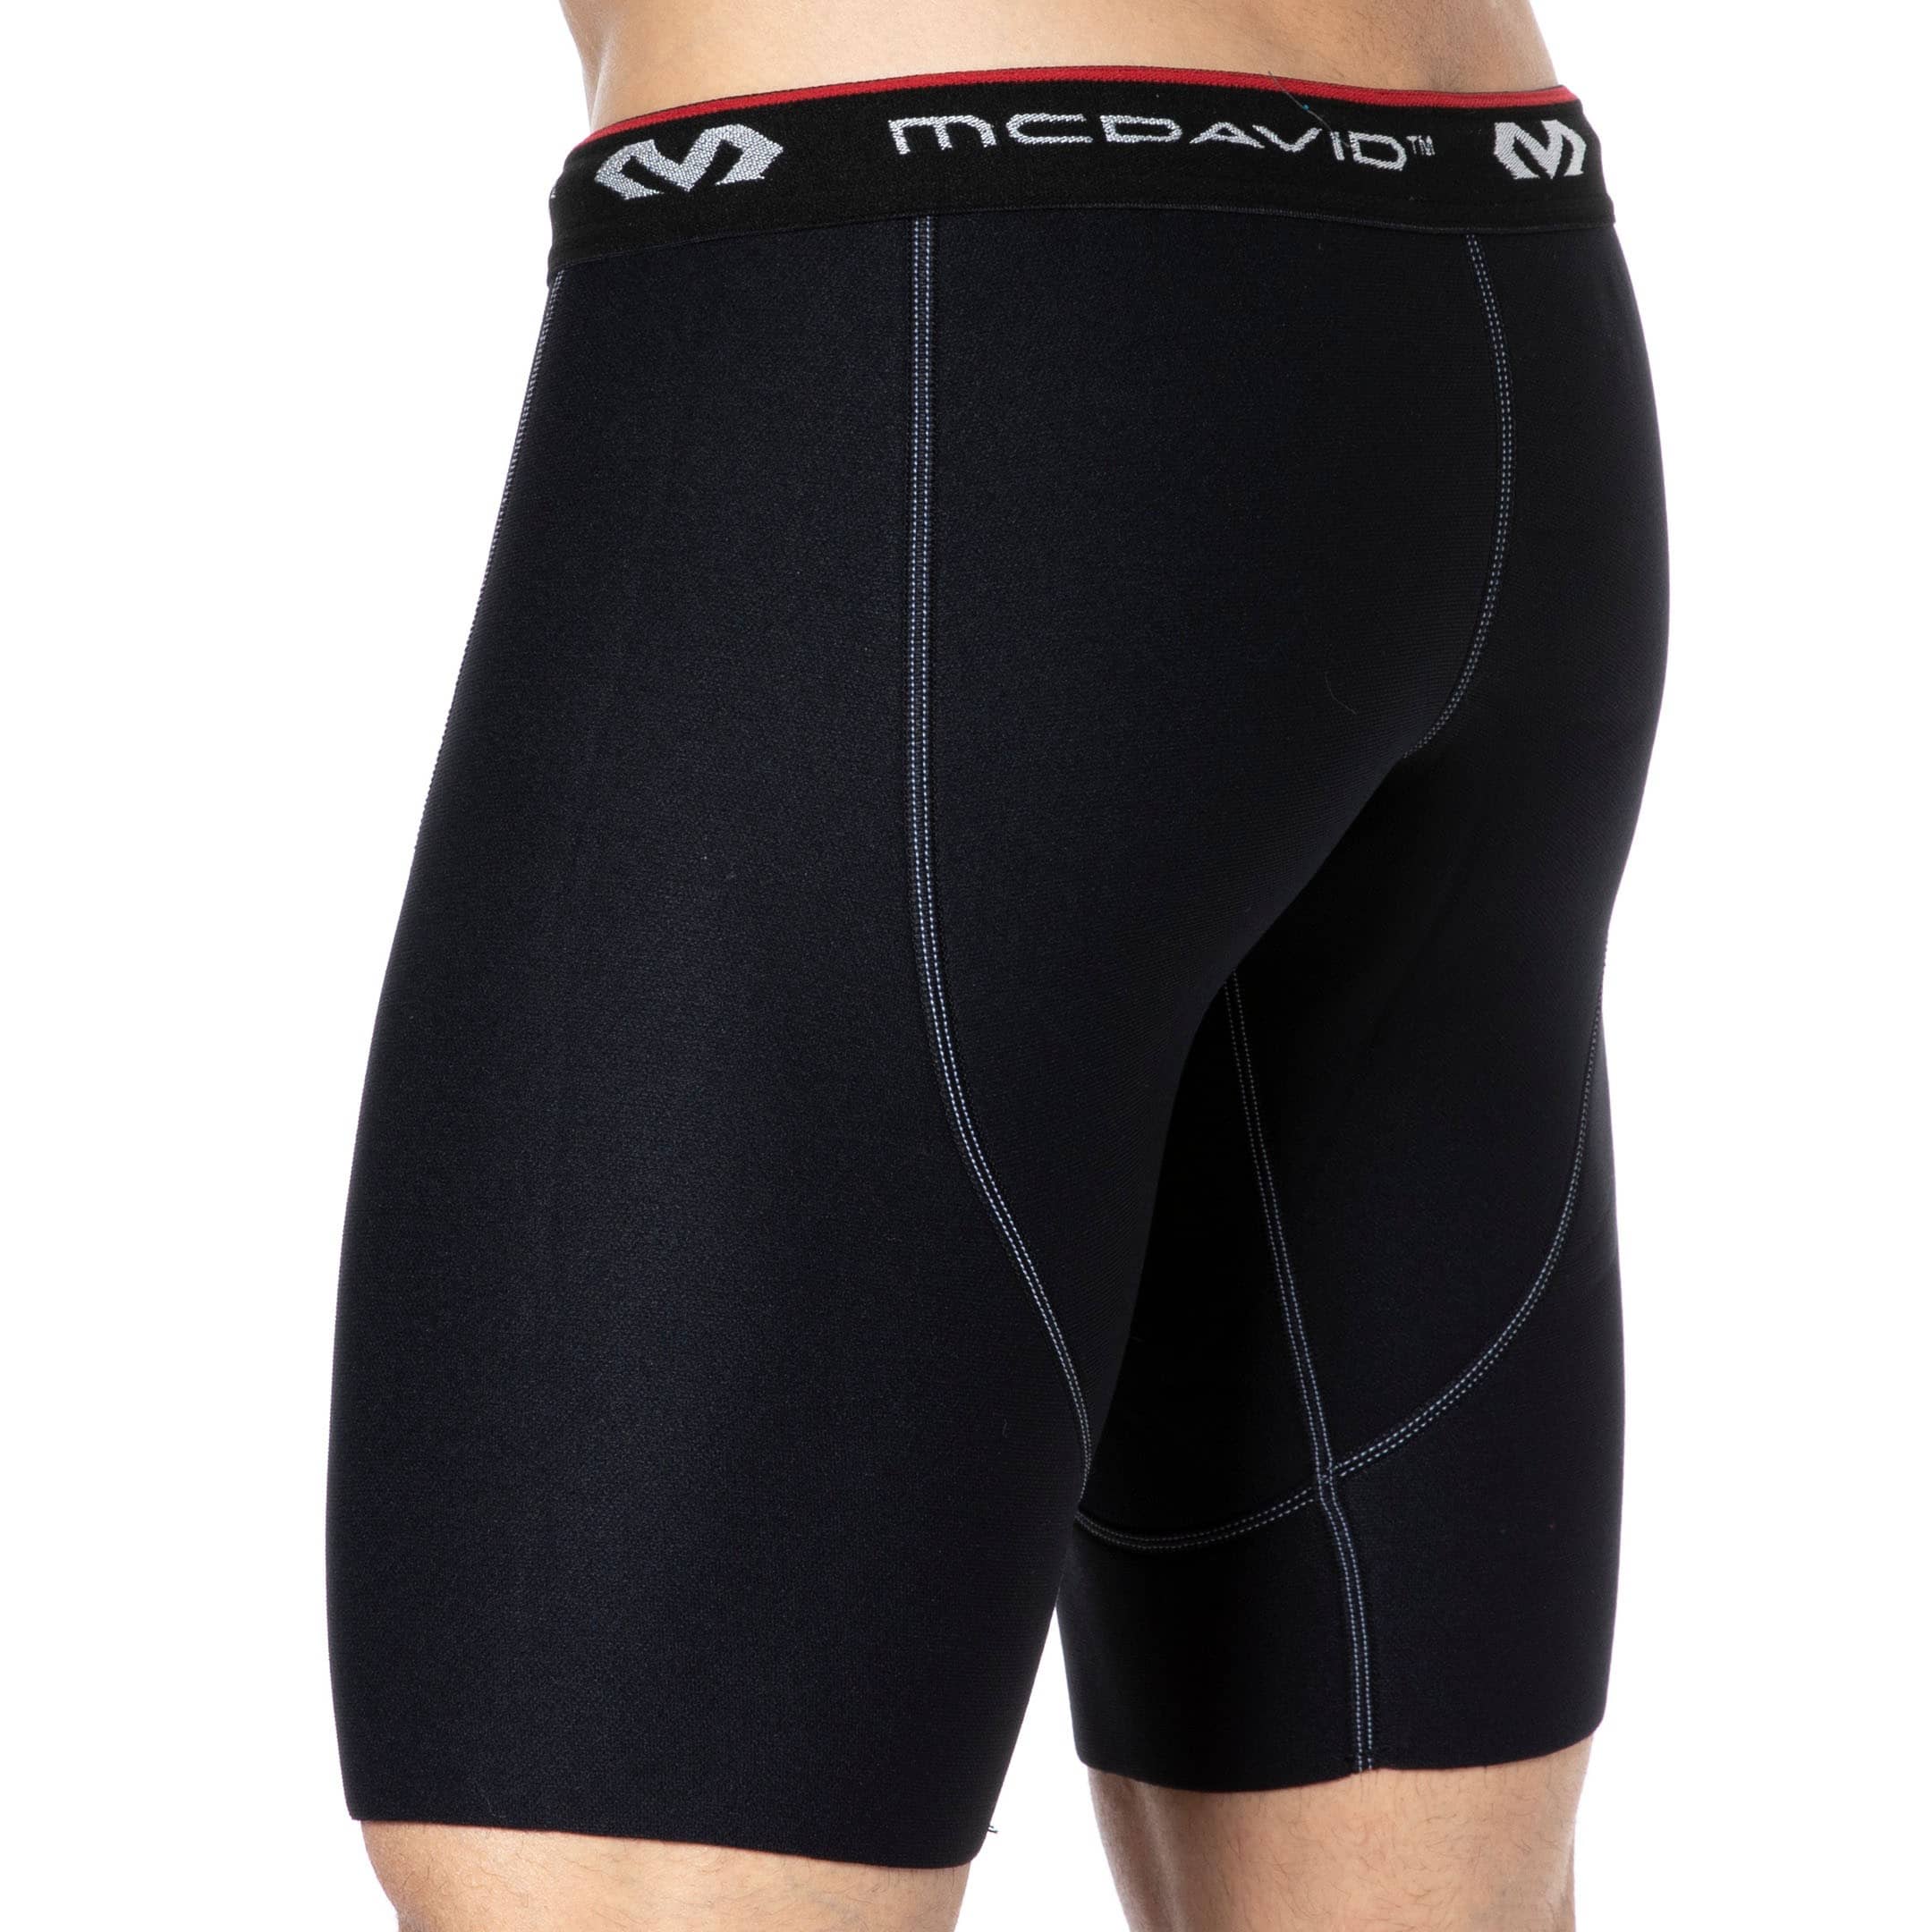 McDavid Compression Shorts Thigh Gluts Injury Recovery Unisex Black Neoprene 